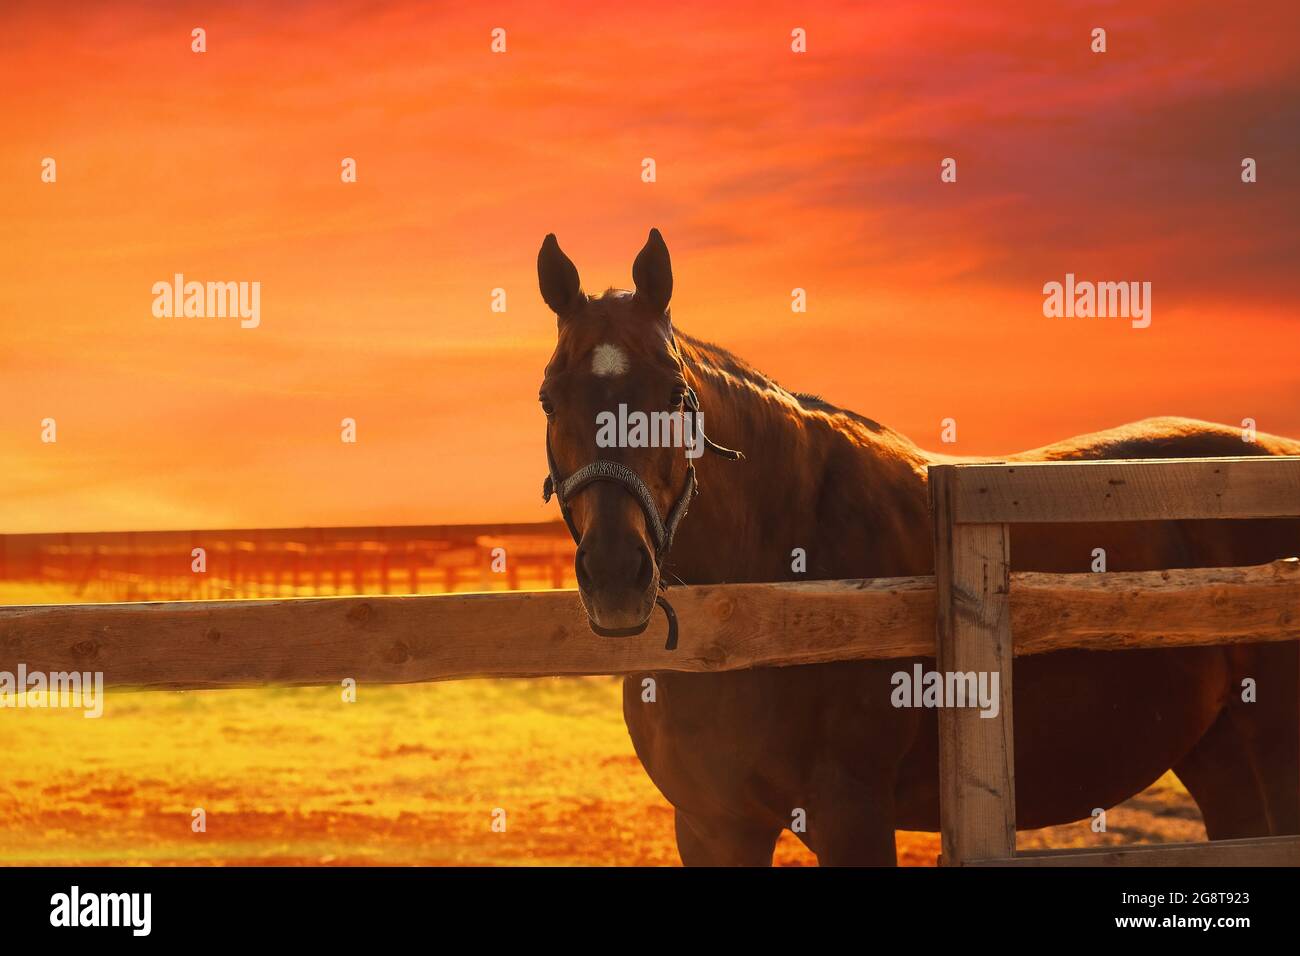 Horse at sunset - orange blurred equistrian background Stock Photo